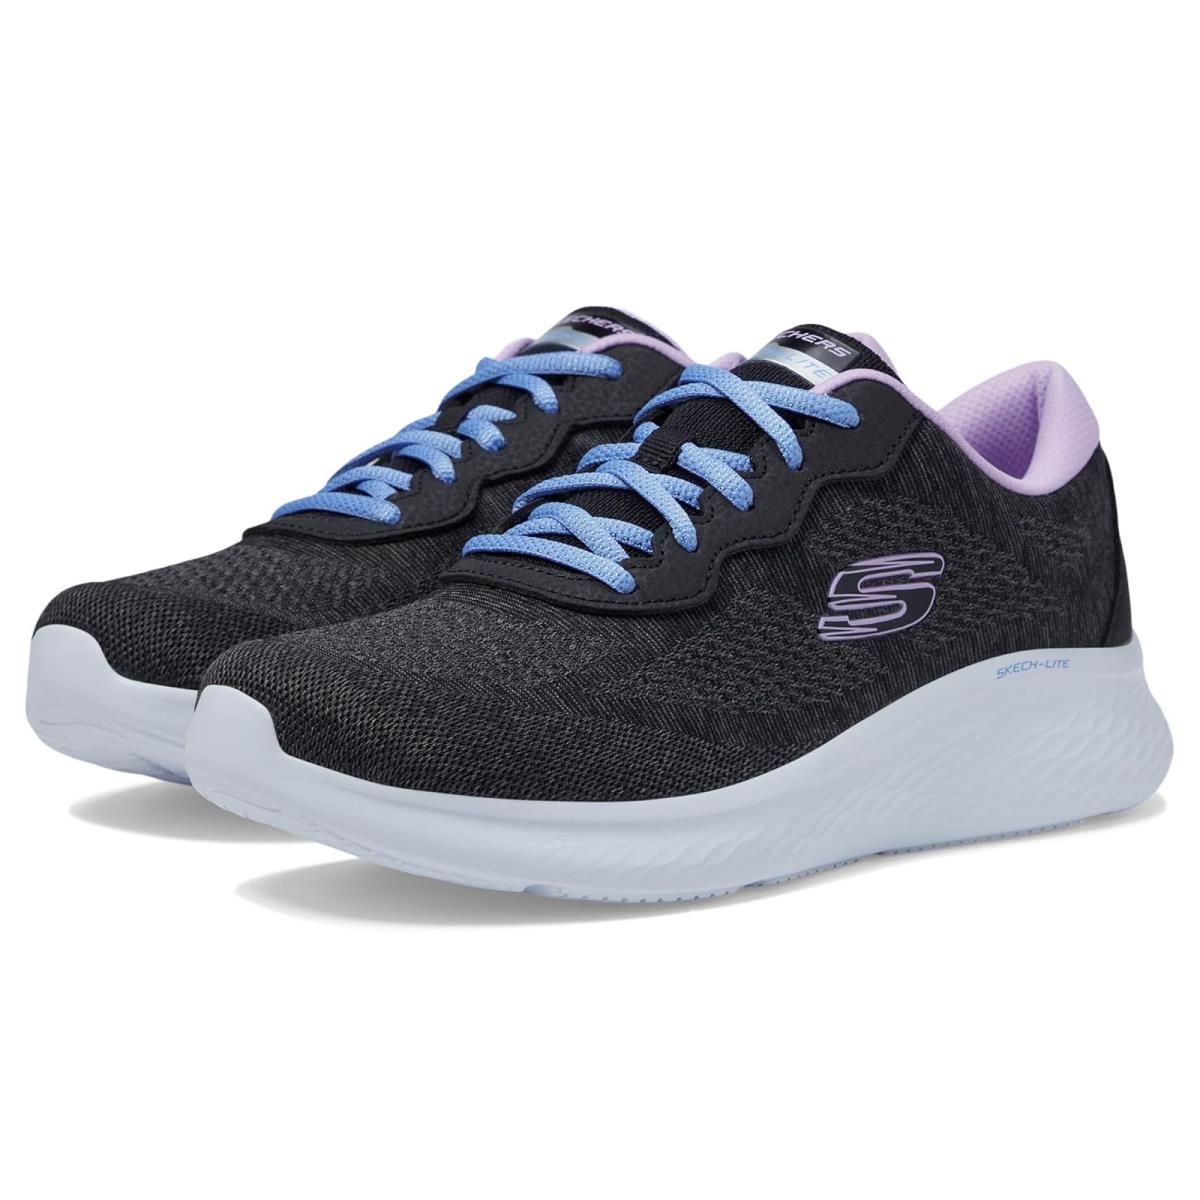 Woman`s Sneakers Athletic Shoes Skechers Skech-lite Pro-cute Debut Black Lavender